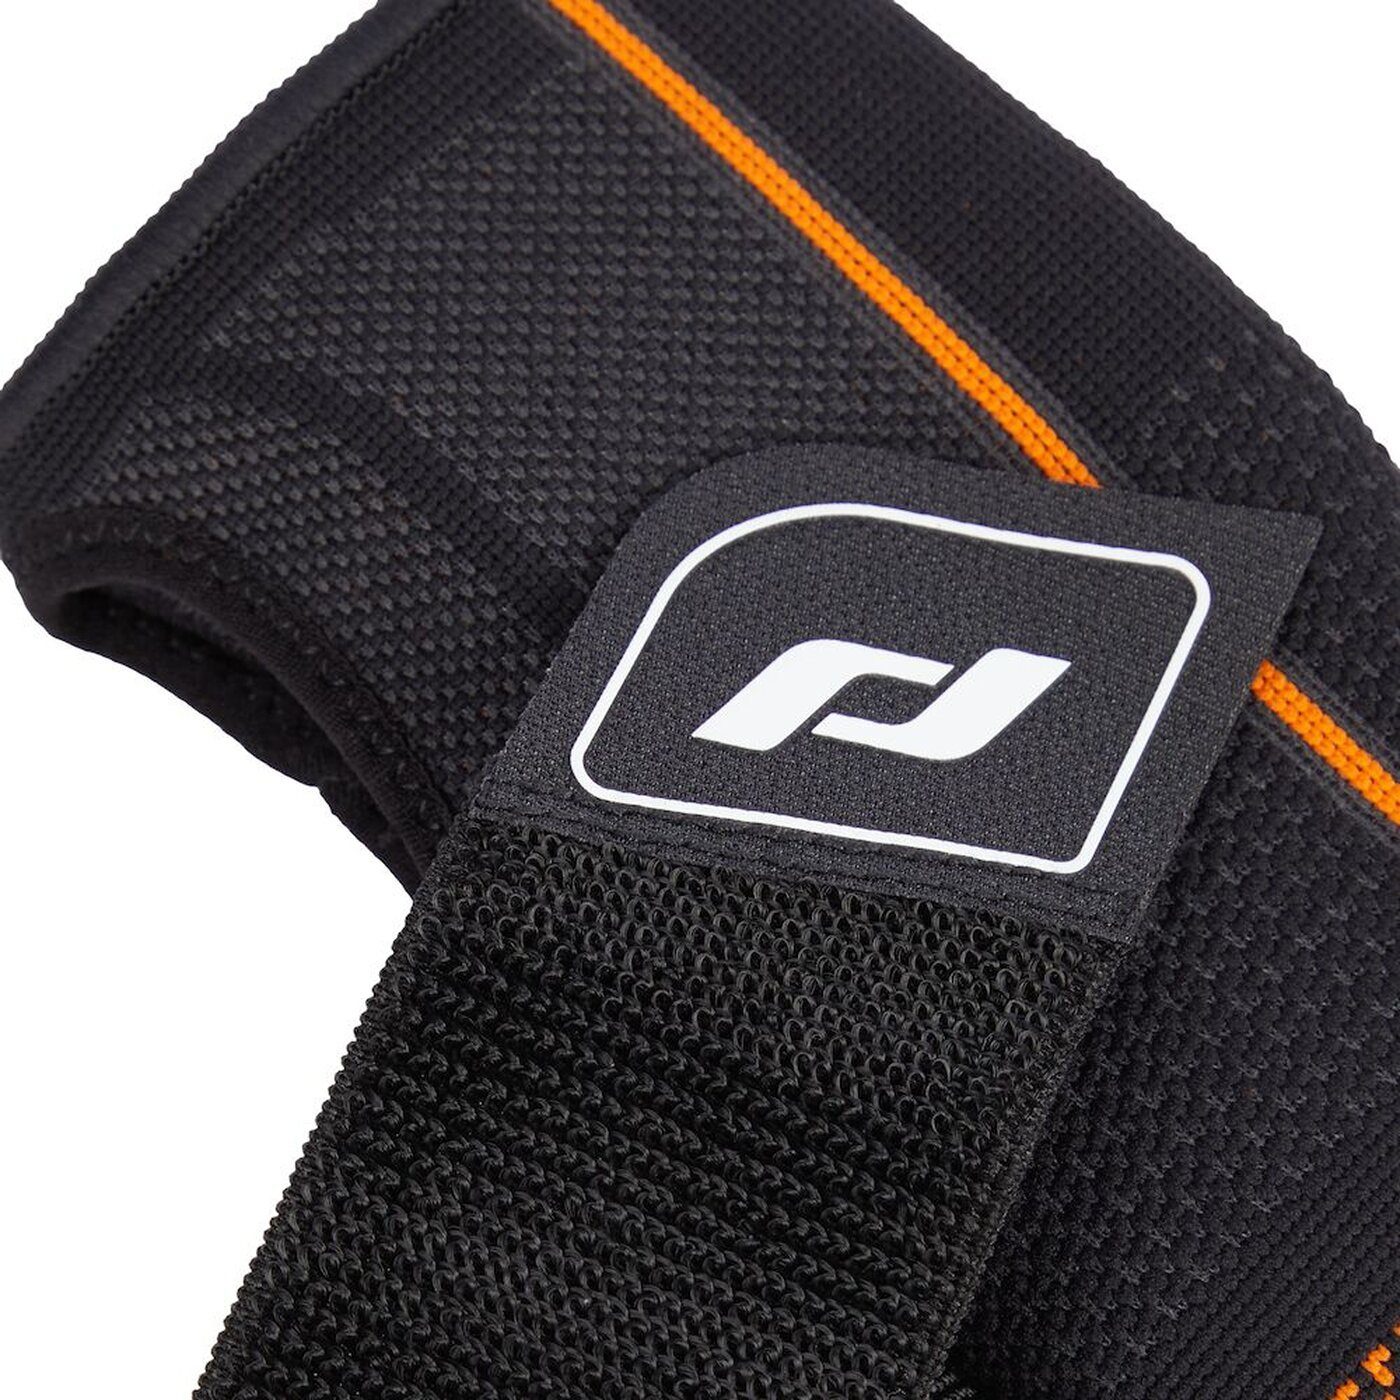 Armschoner Pro support 900 Handg-Bandage Touch Wrist